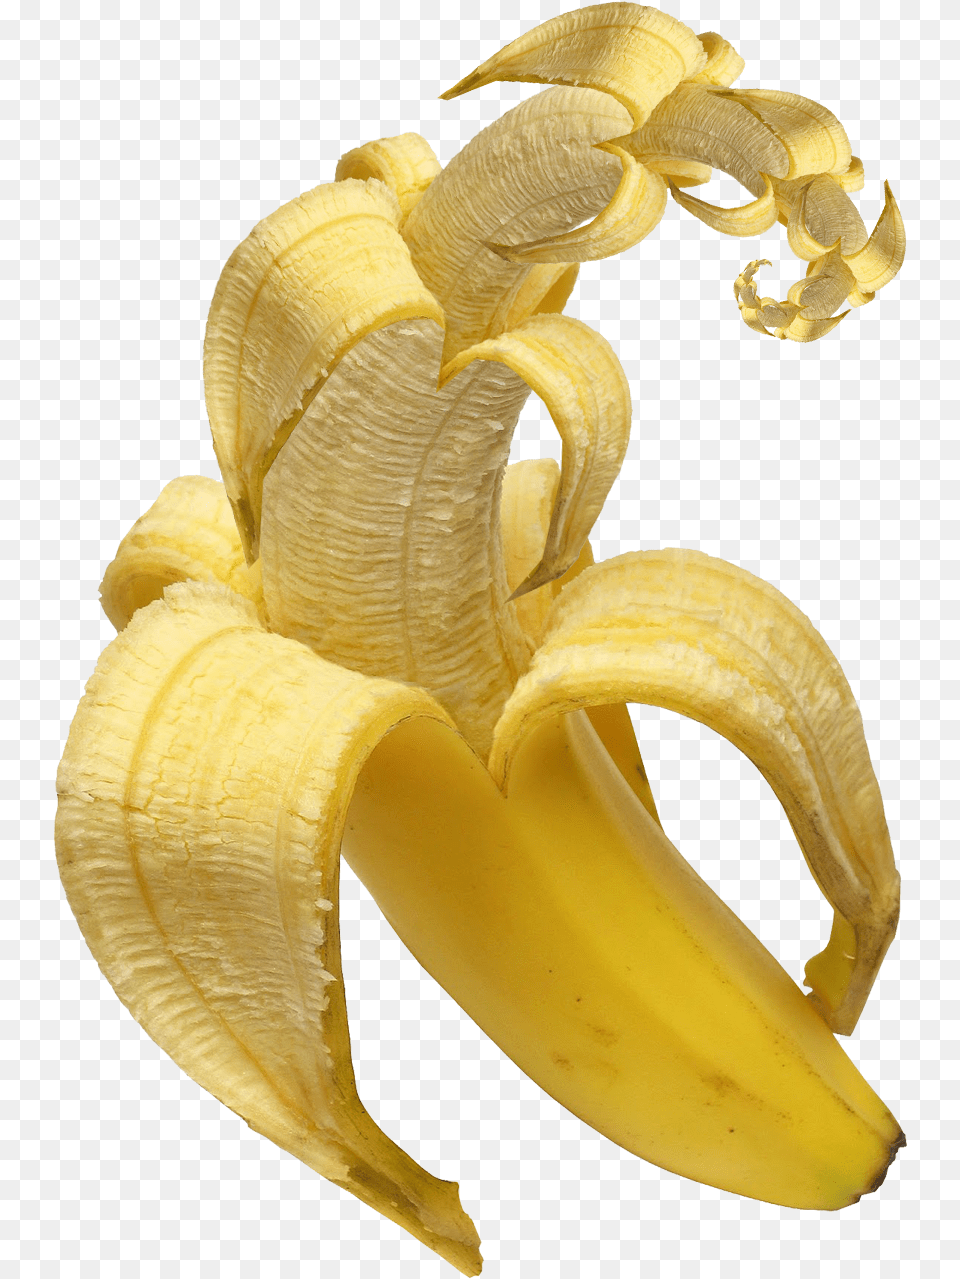 Banana Banana Family Fruit Food Produce You39re The Top Card, Plant Png